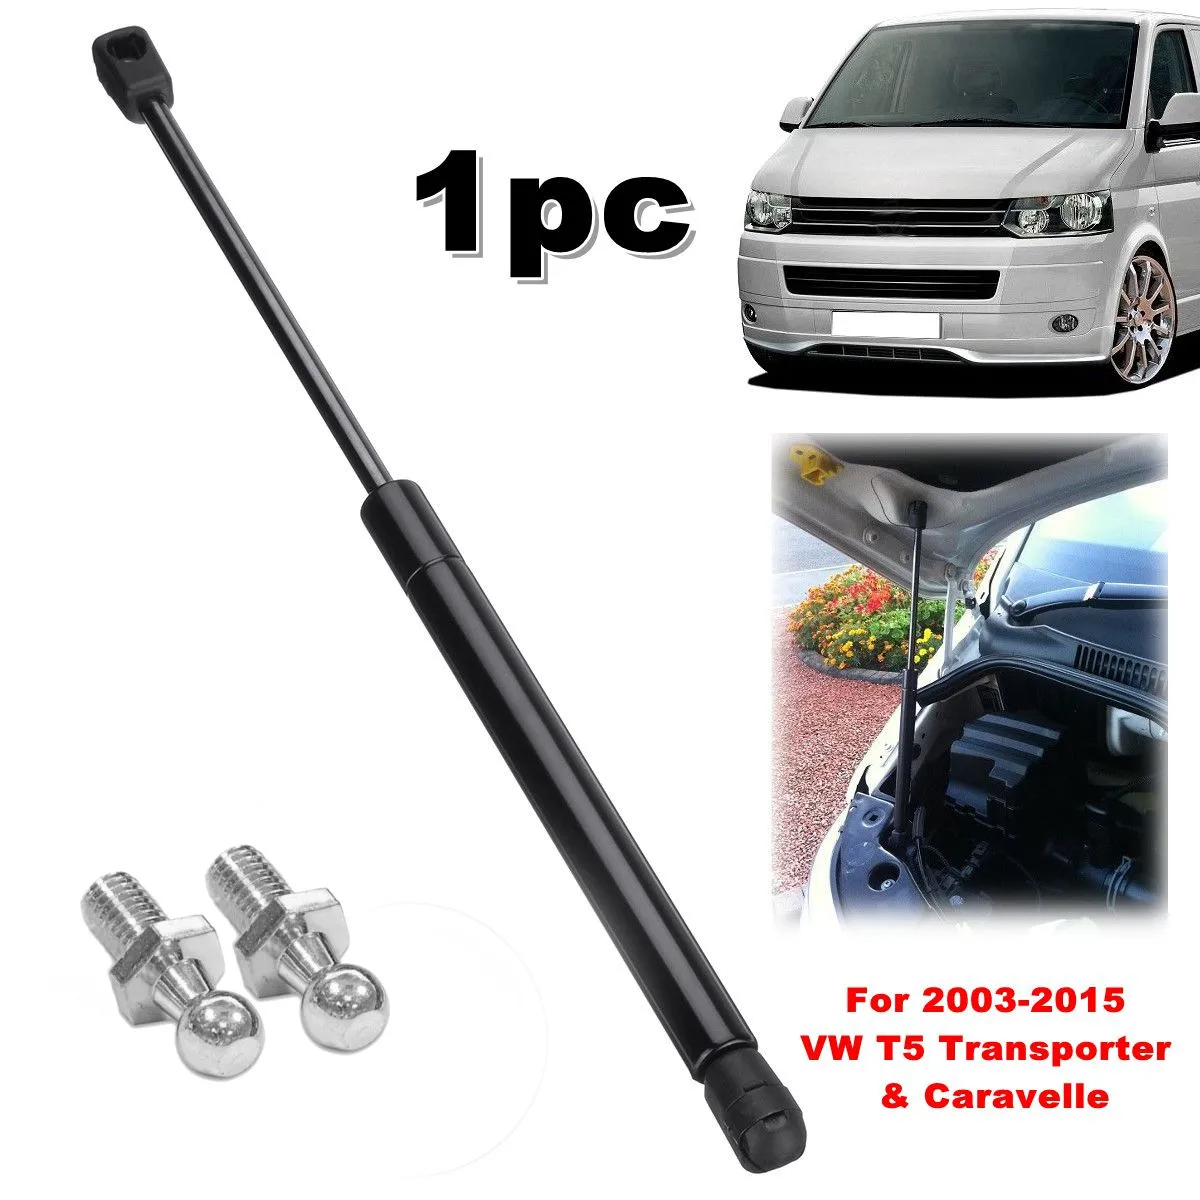 

NEW 1Pc Front Bonnet Strut Gas Hood Support 7E0823359 For Volkswagen VW T5 Transporter Caravelle 2003-2011 2012 2013 2014 2015